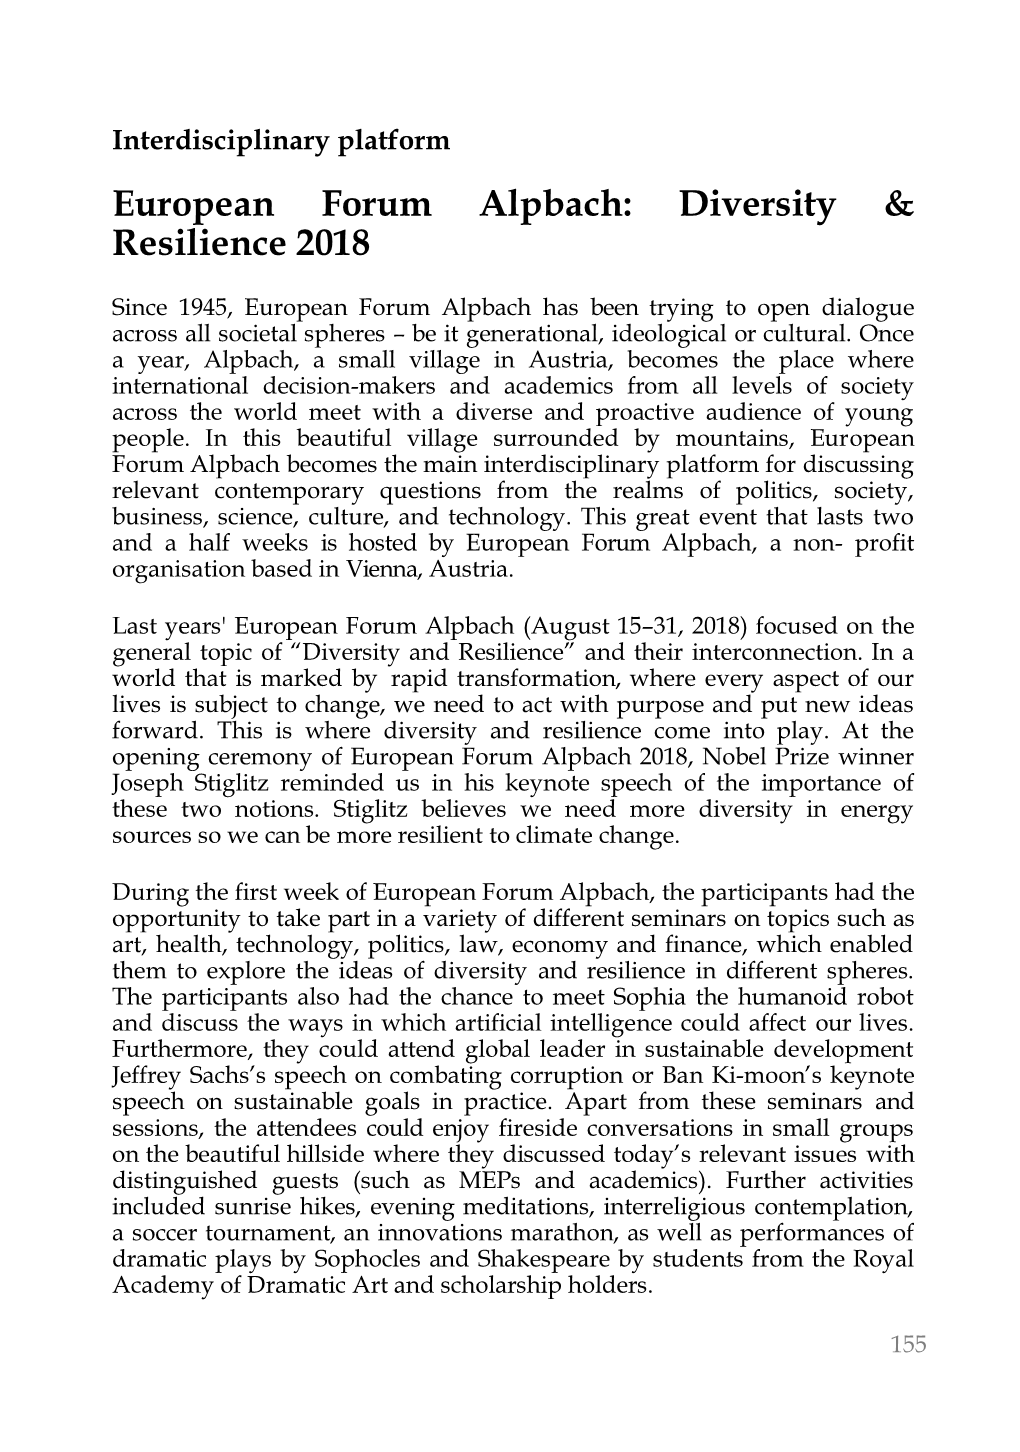 European Forum Alpbach: Diversity & Resilience 2018